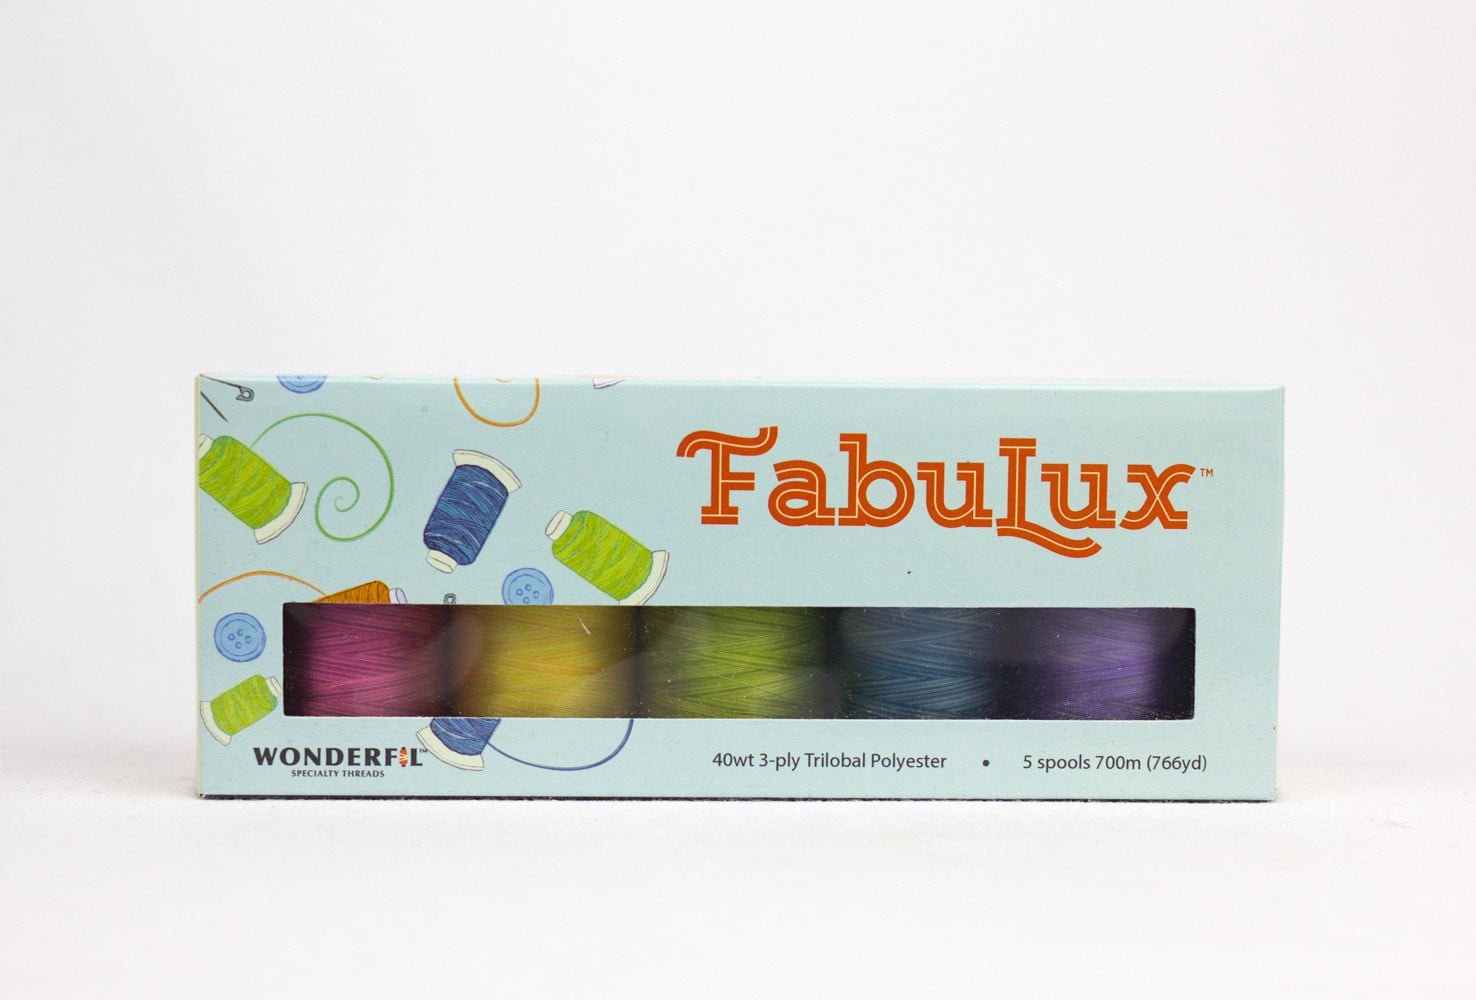 FabuLux™ 40wt Trilobal Polyester Pack WonderFil